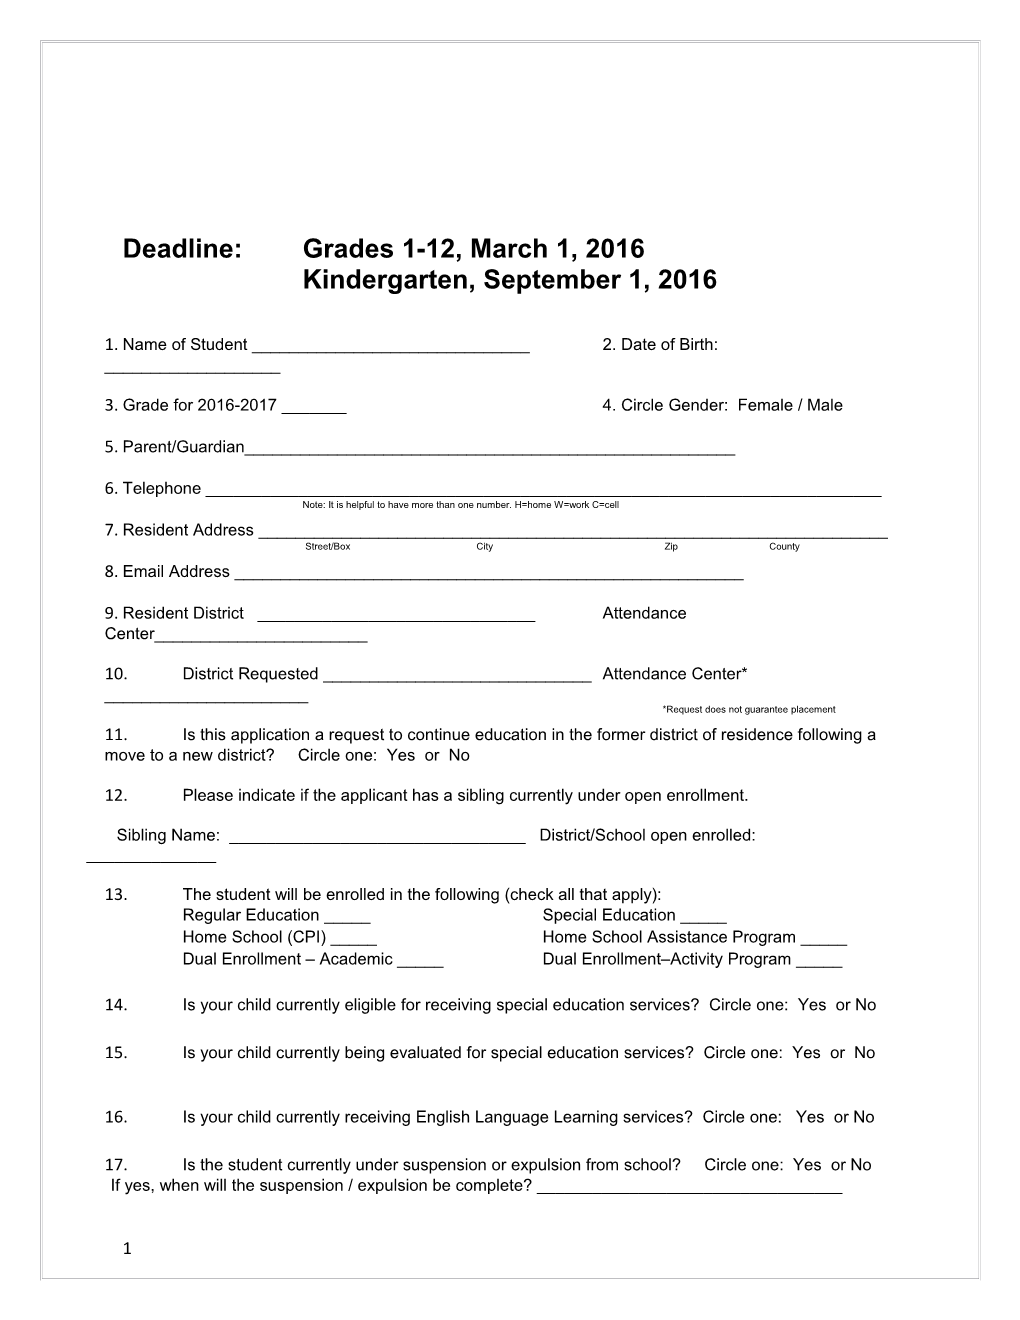 Deadline: Grades 1-12, March 1, 2016